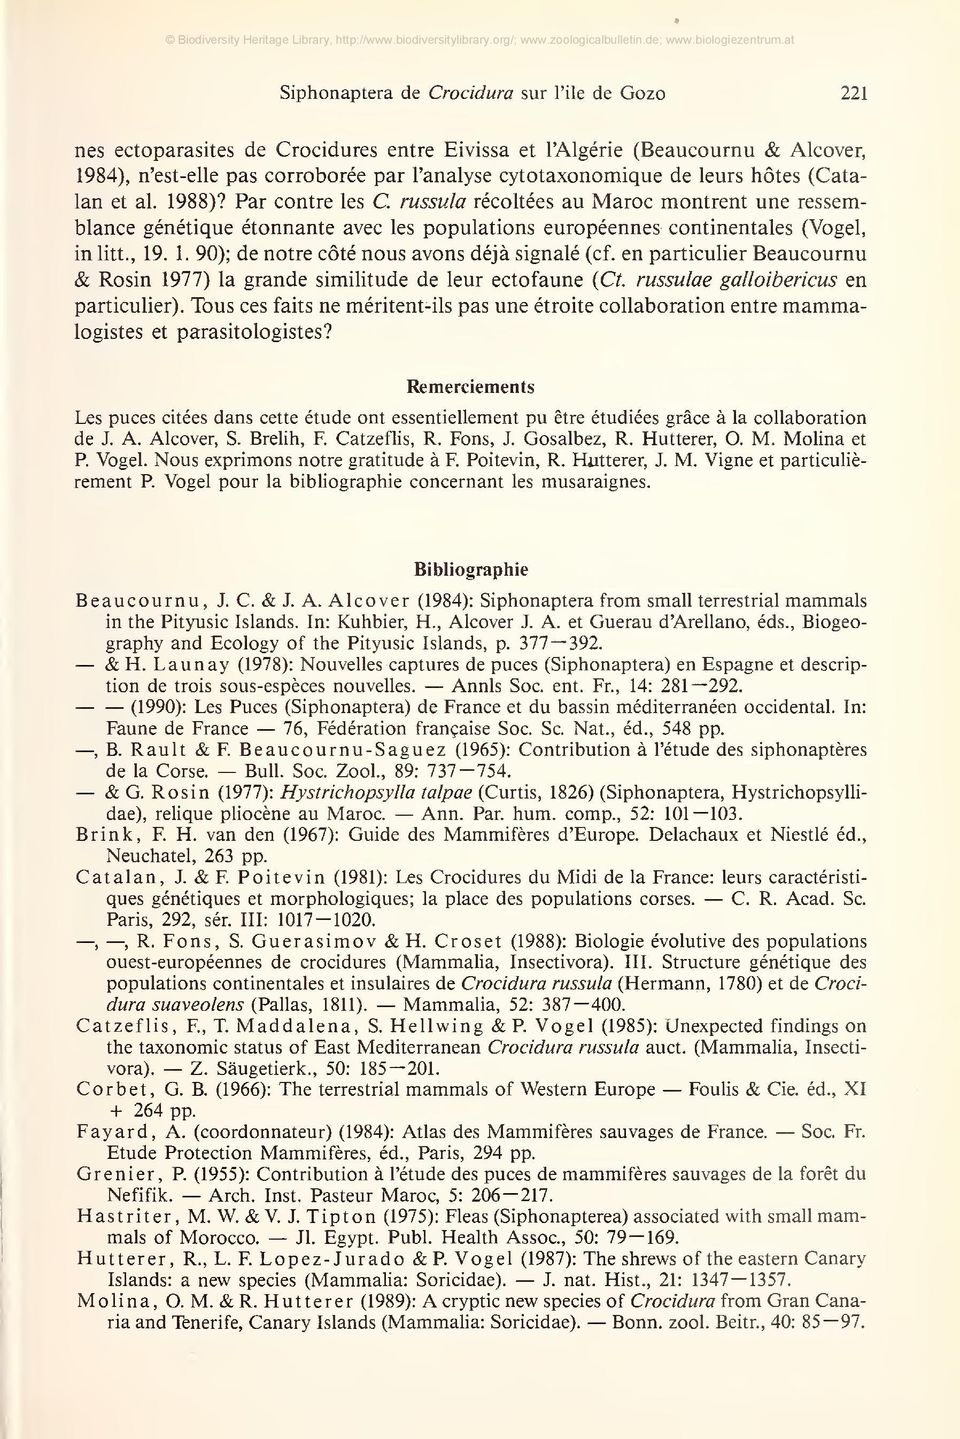 en particulier Beaucournu & Rosin 1977) la grande similitude de leur ectofaune {Ct. russulae galloibericus en particulier).